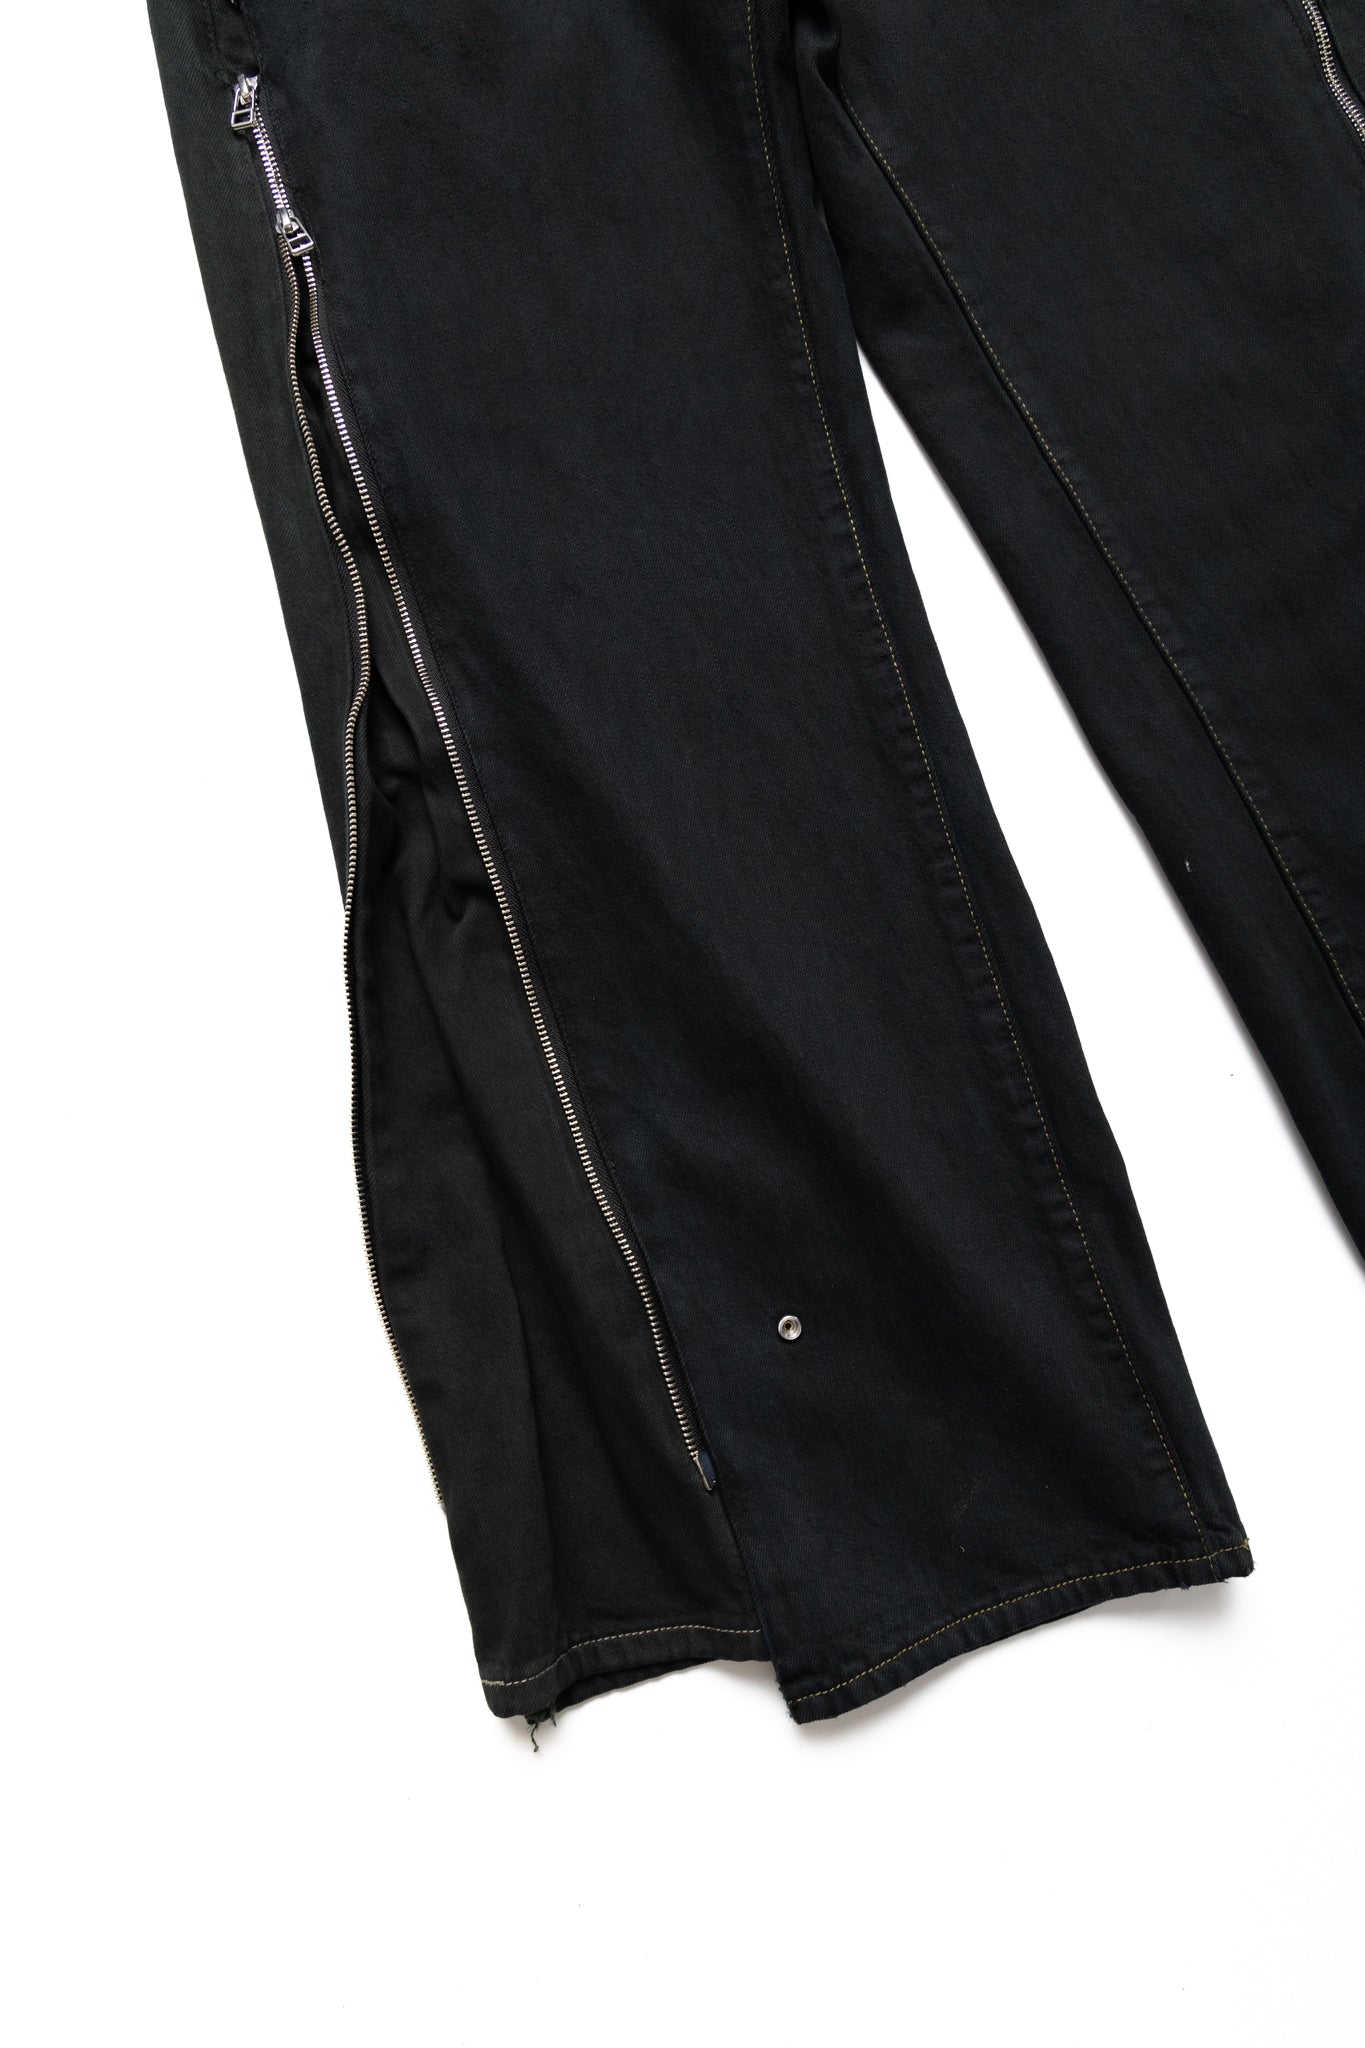 Zip Baggy Jeans Black - M (3)